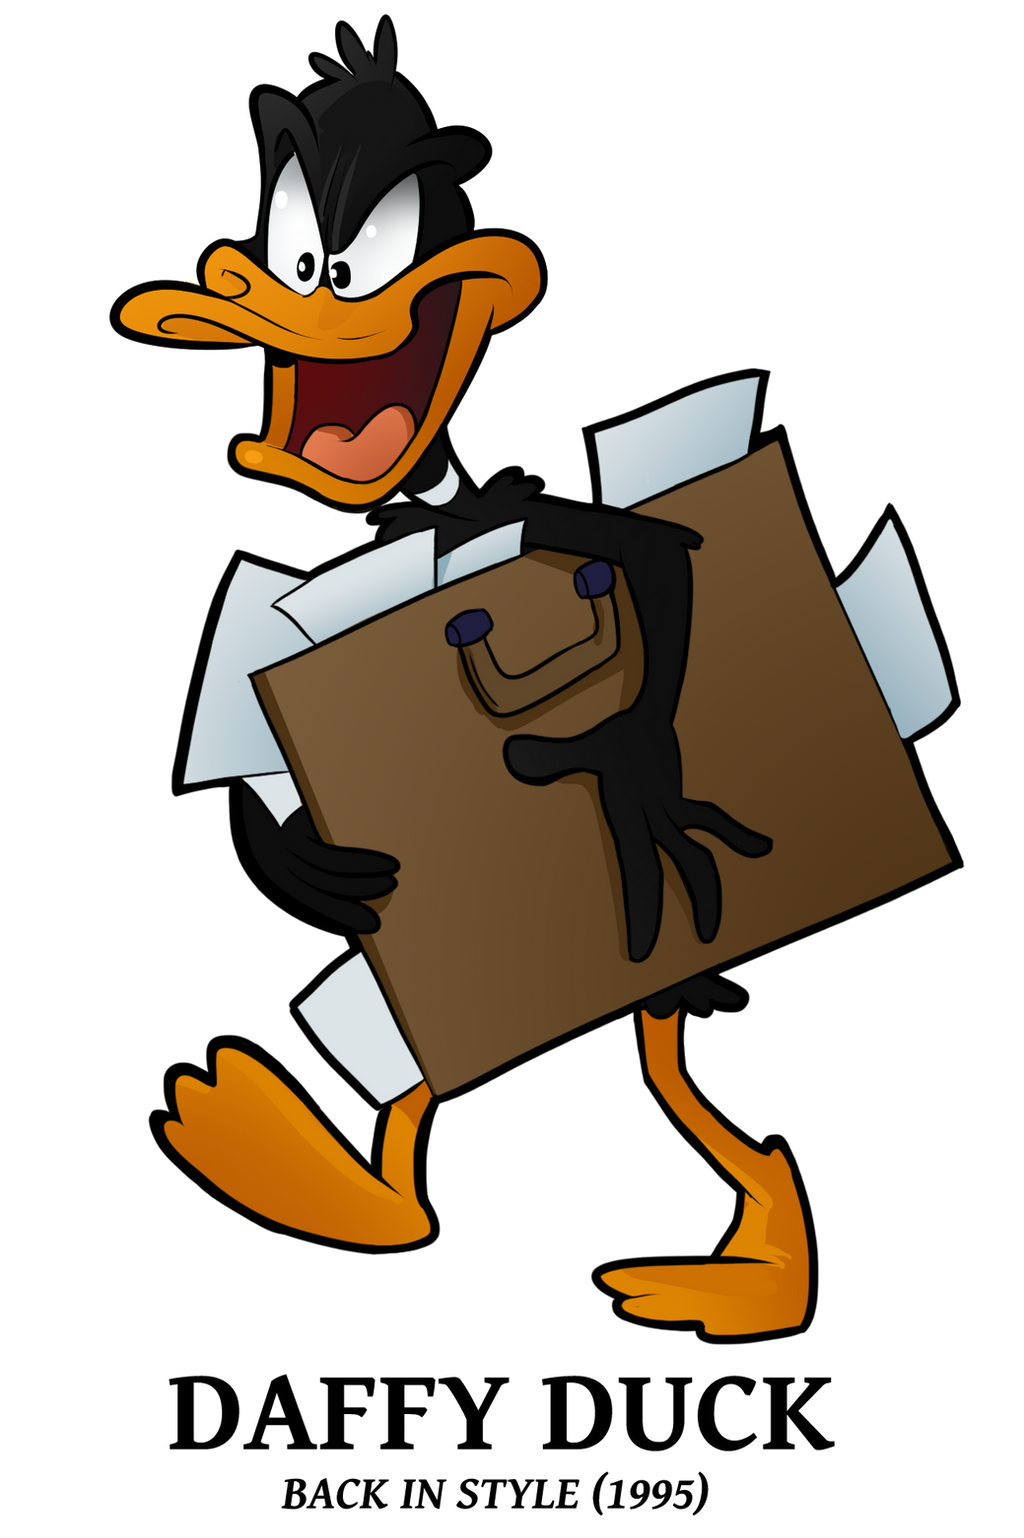 1995 - Daffy Duck